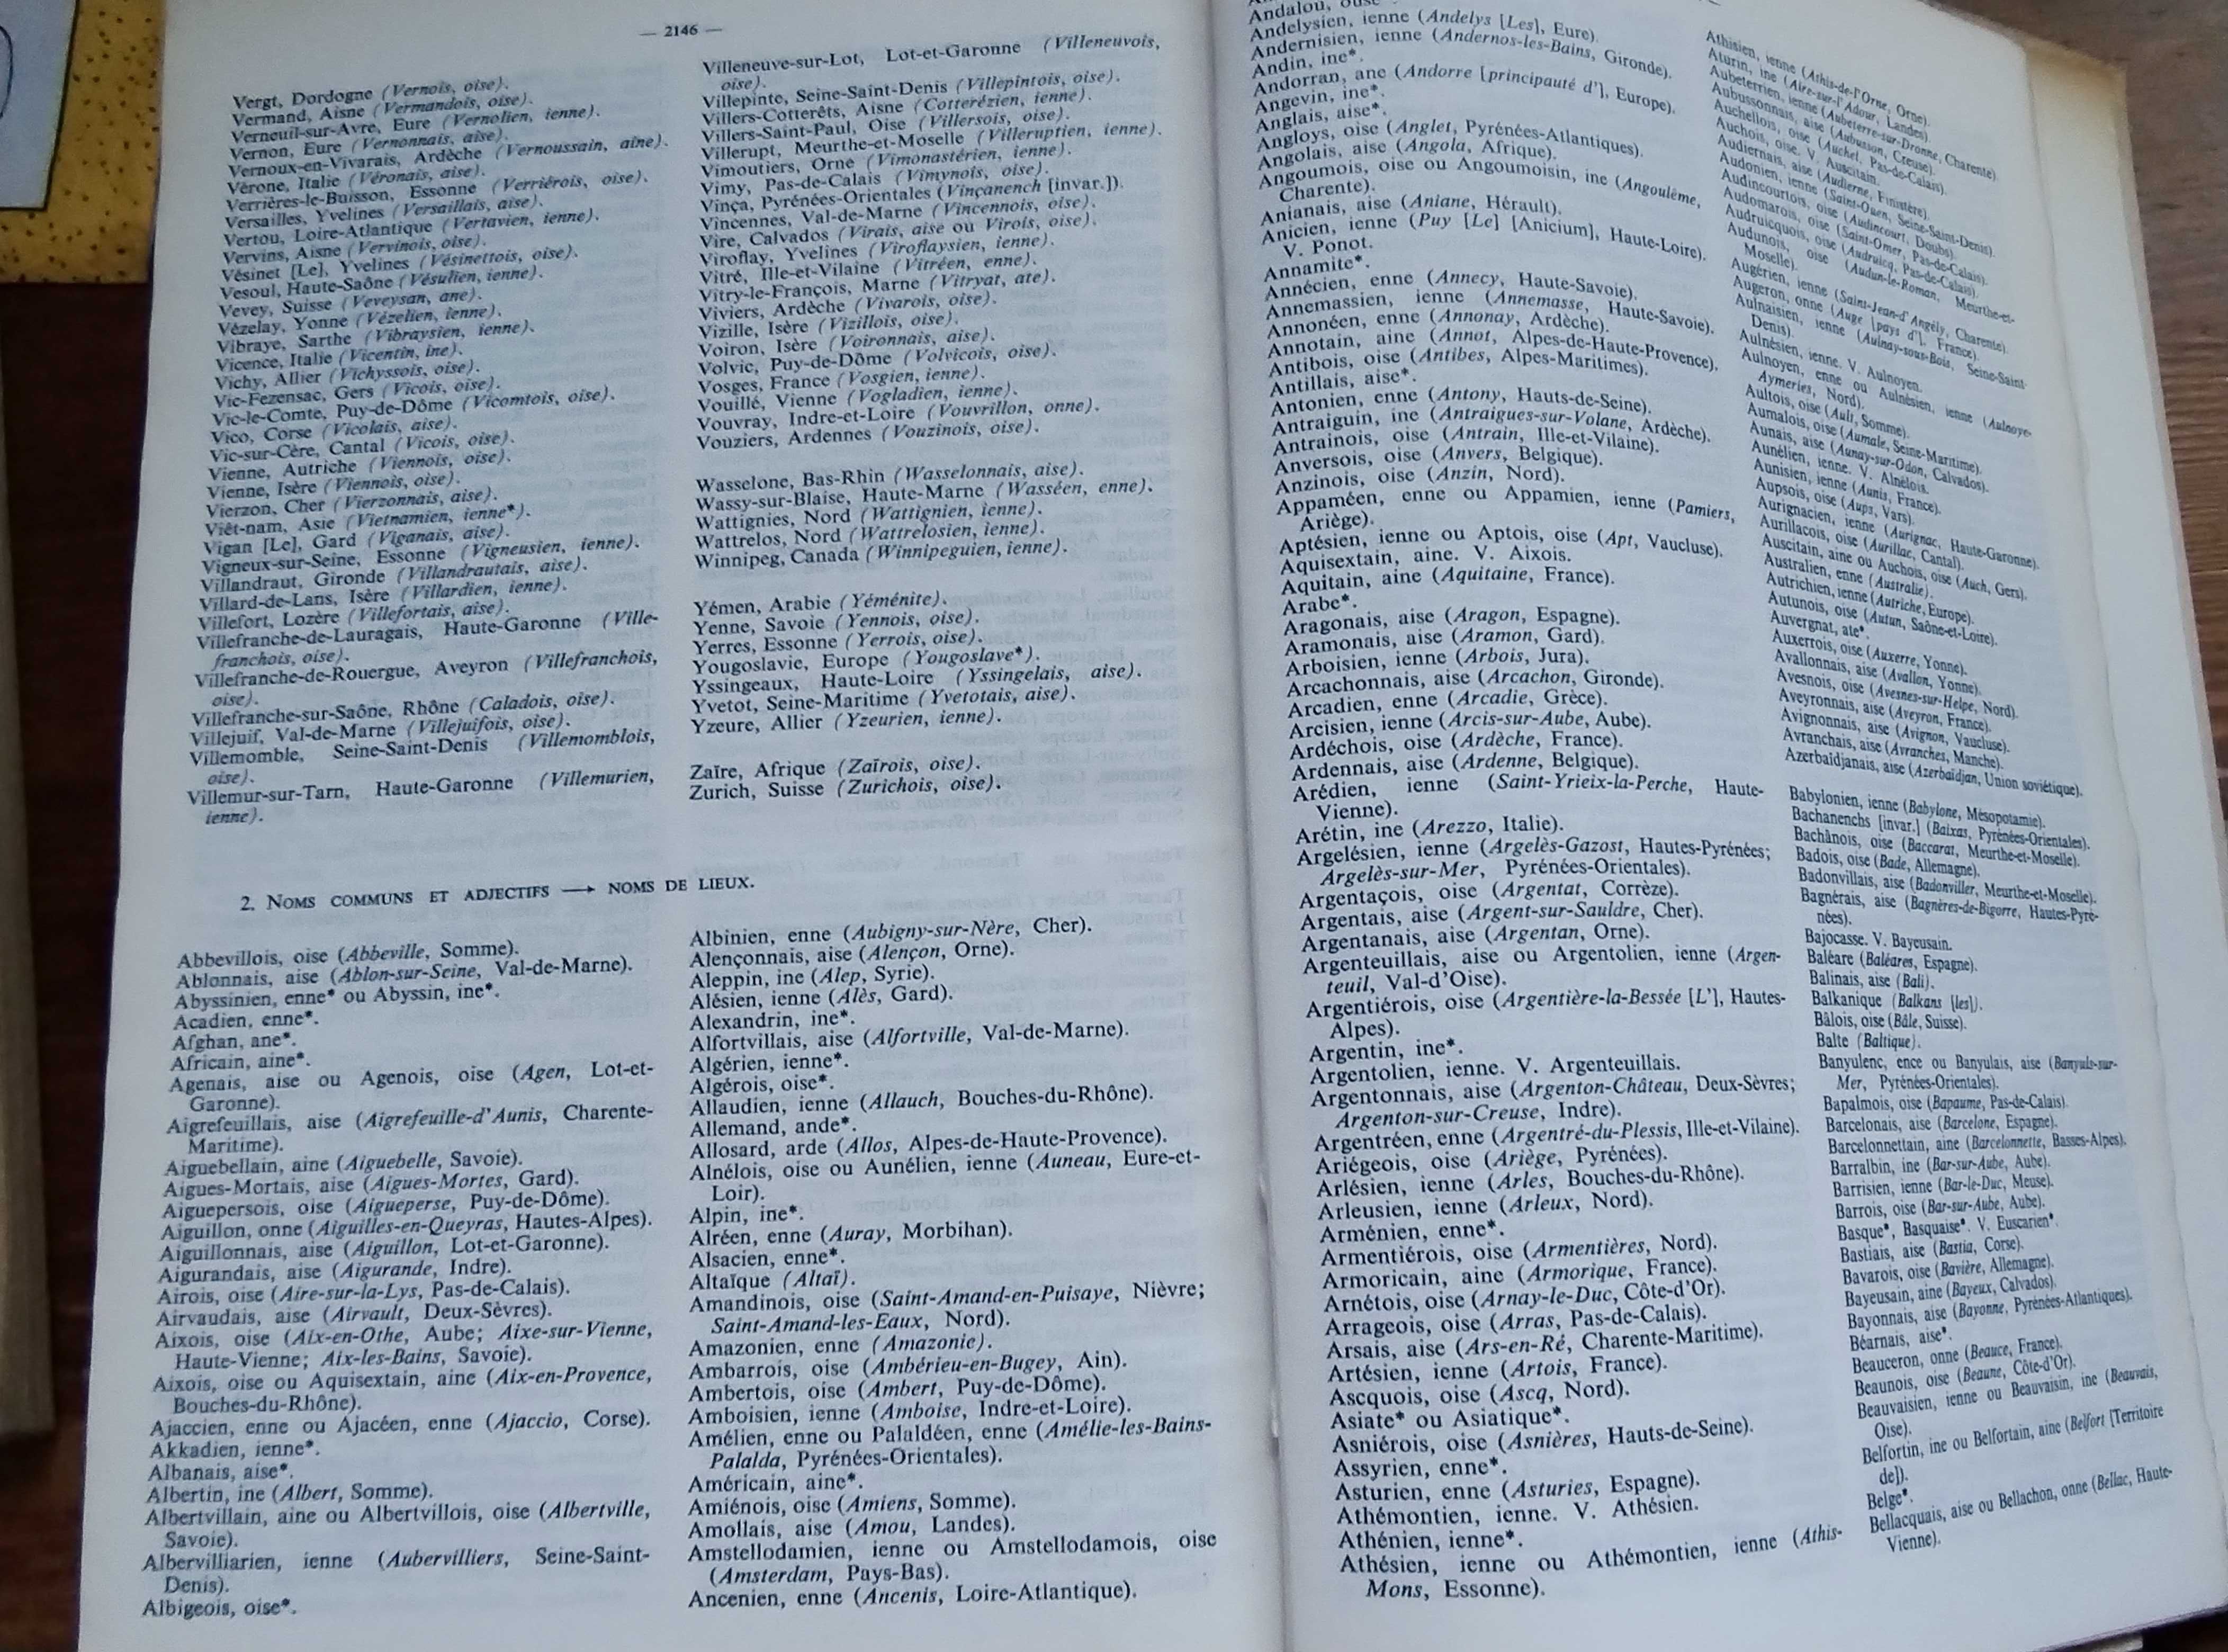 Le petit Robert 1 dictionnaire, Paris 1967, słownik francuski